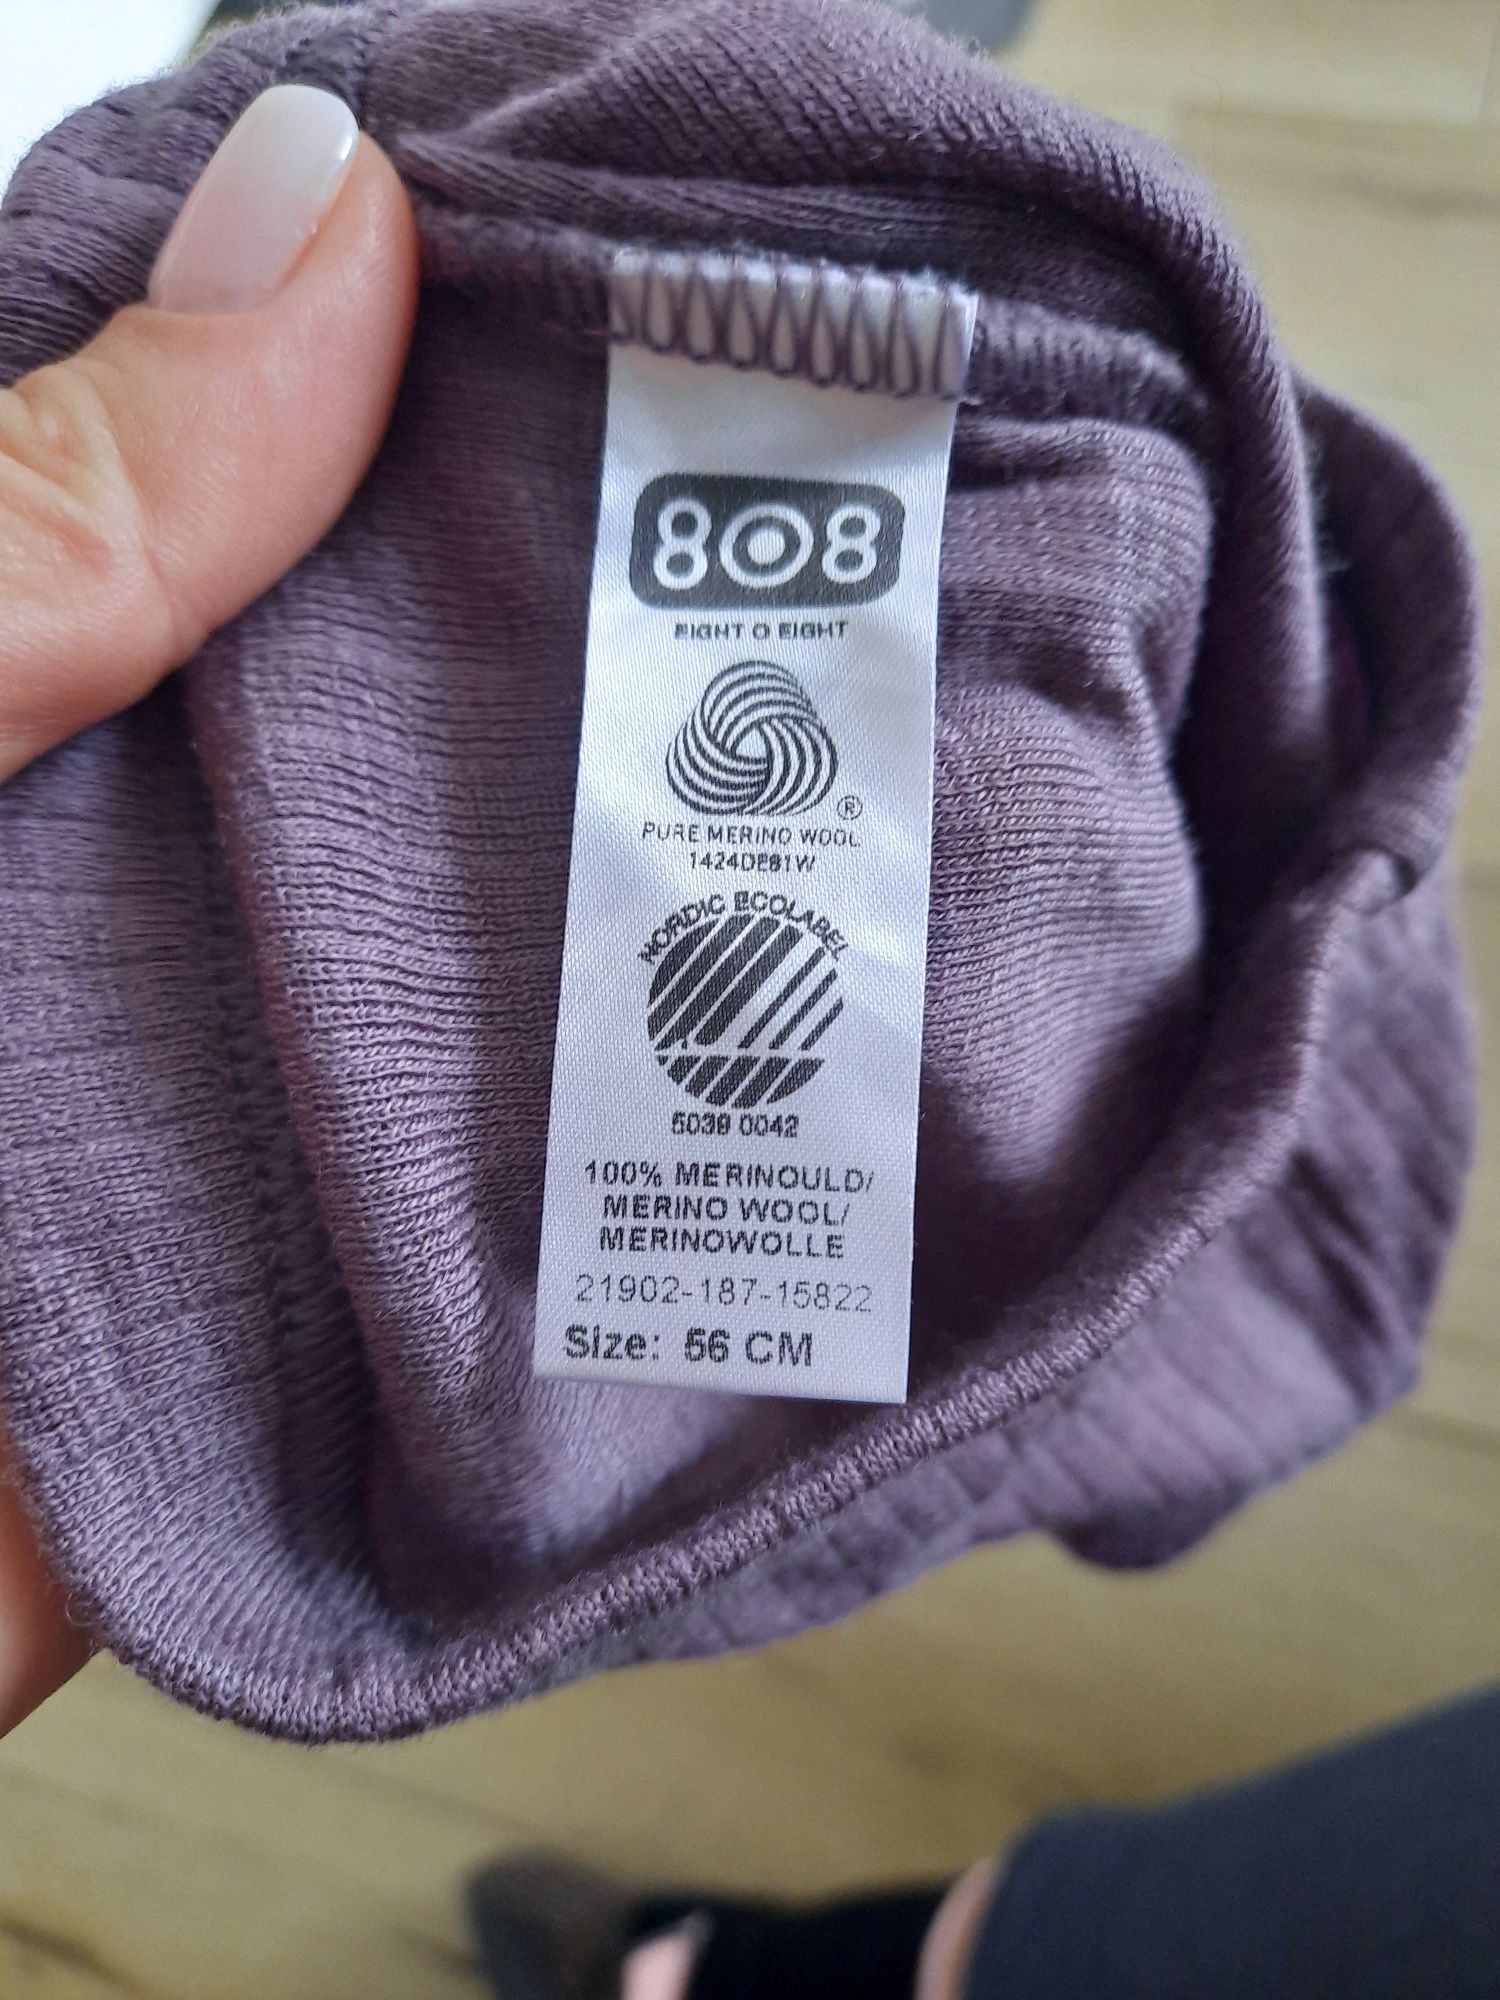 Pantaloni lana merino, 808, marimea 56 (nou nascut)